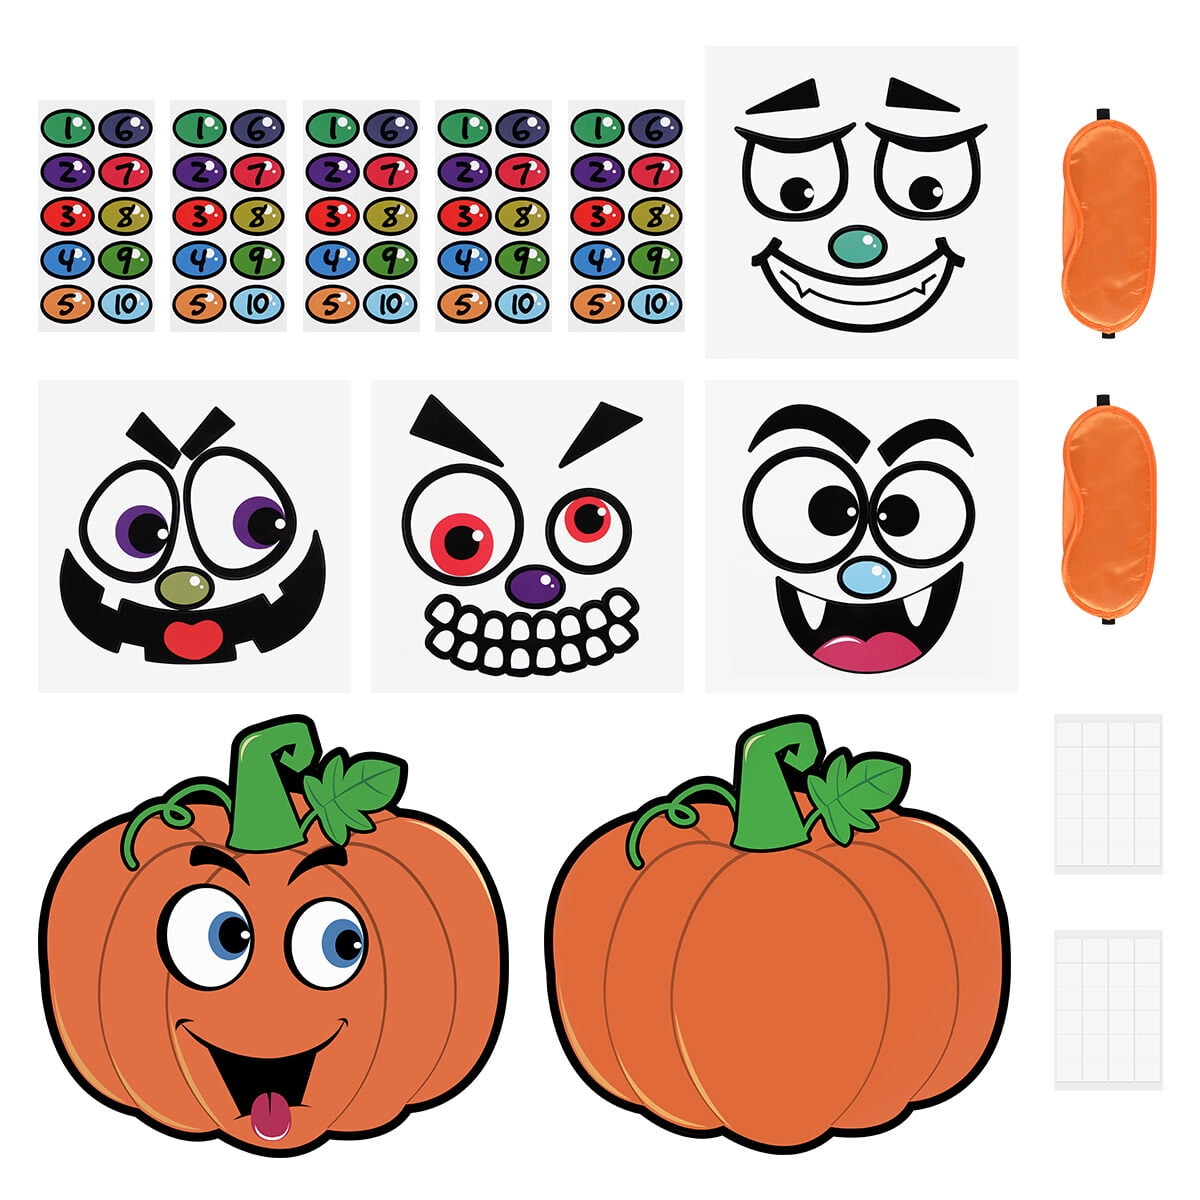 Syncfun Halloween Kids DIY Arts and Craft Coloring Pumpkin Kit for